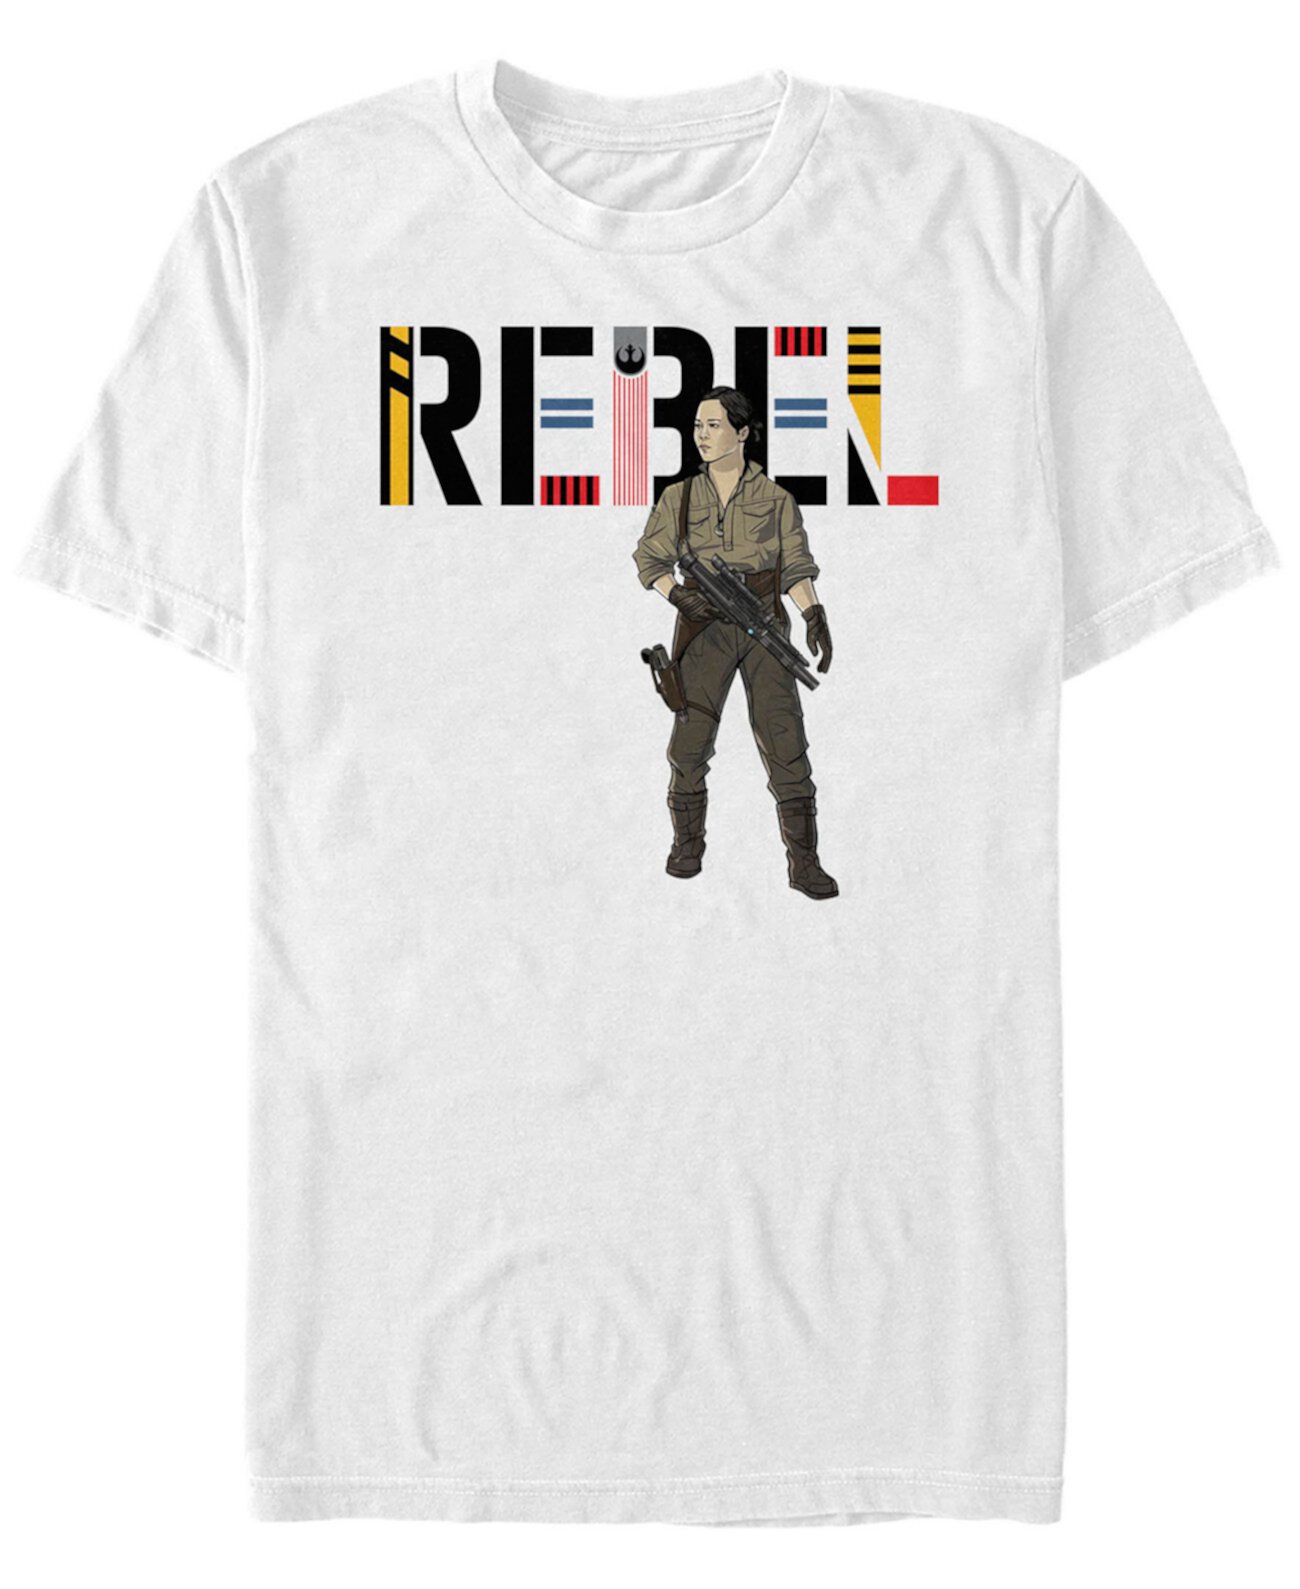 Мужская футболка Star Wars Rise of Skywalker Rebel Rose с коротким рукавом FIFTH SUN